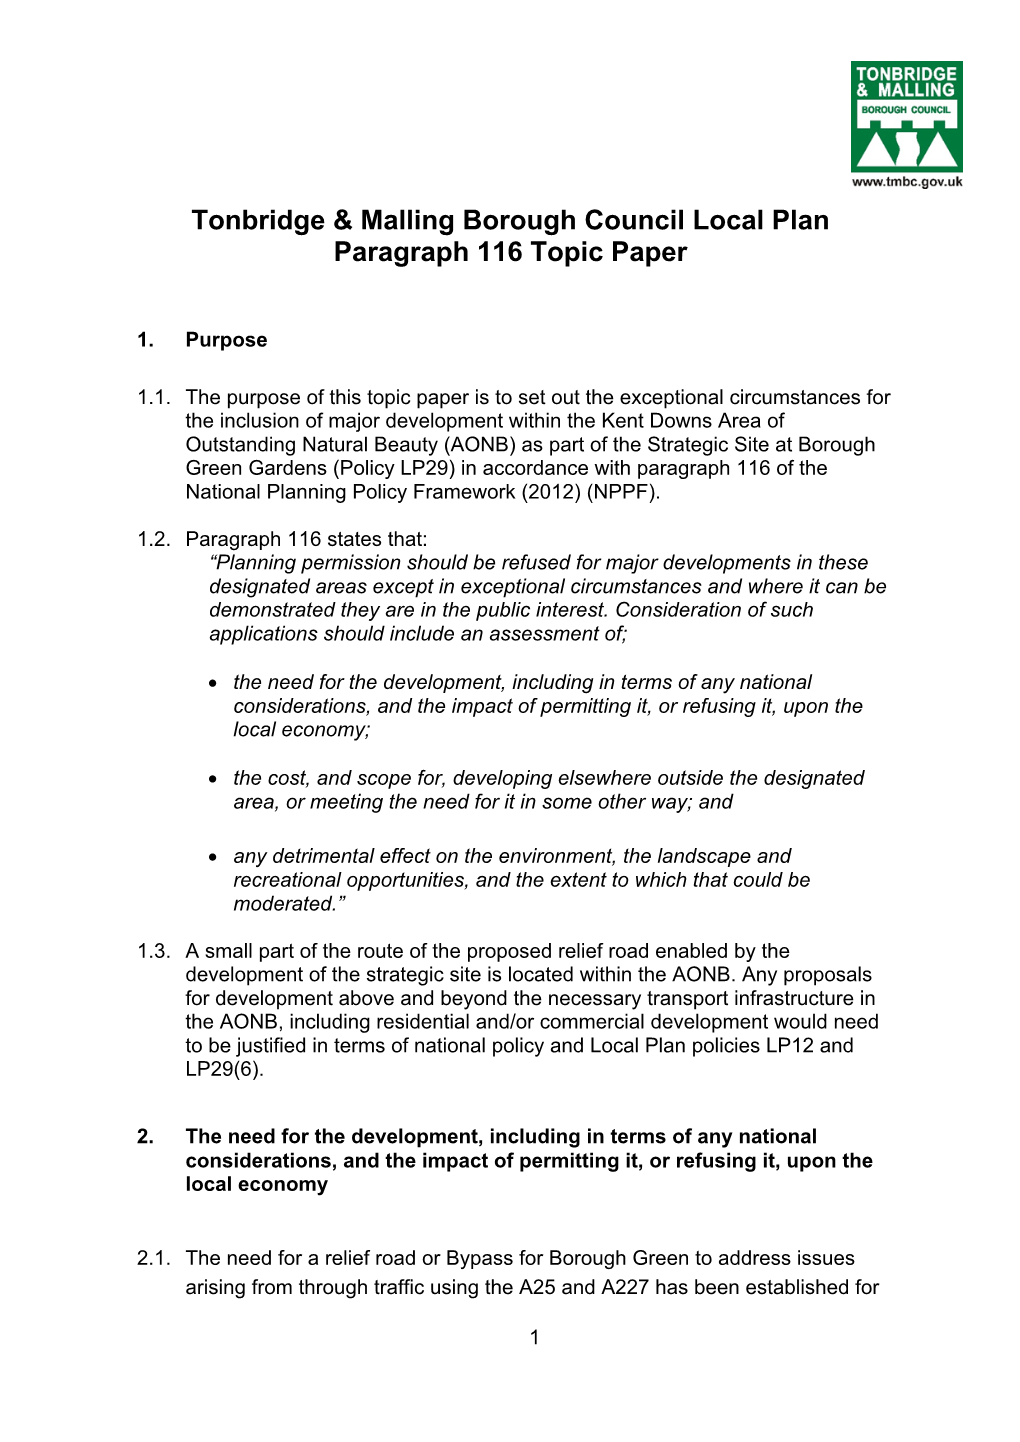 Tonbridge & Malling Borough Council Local Plan Paragraph 116 Topic